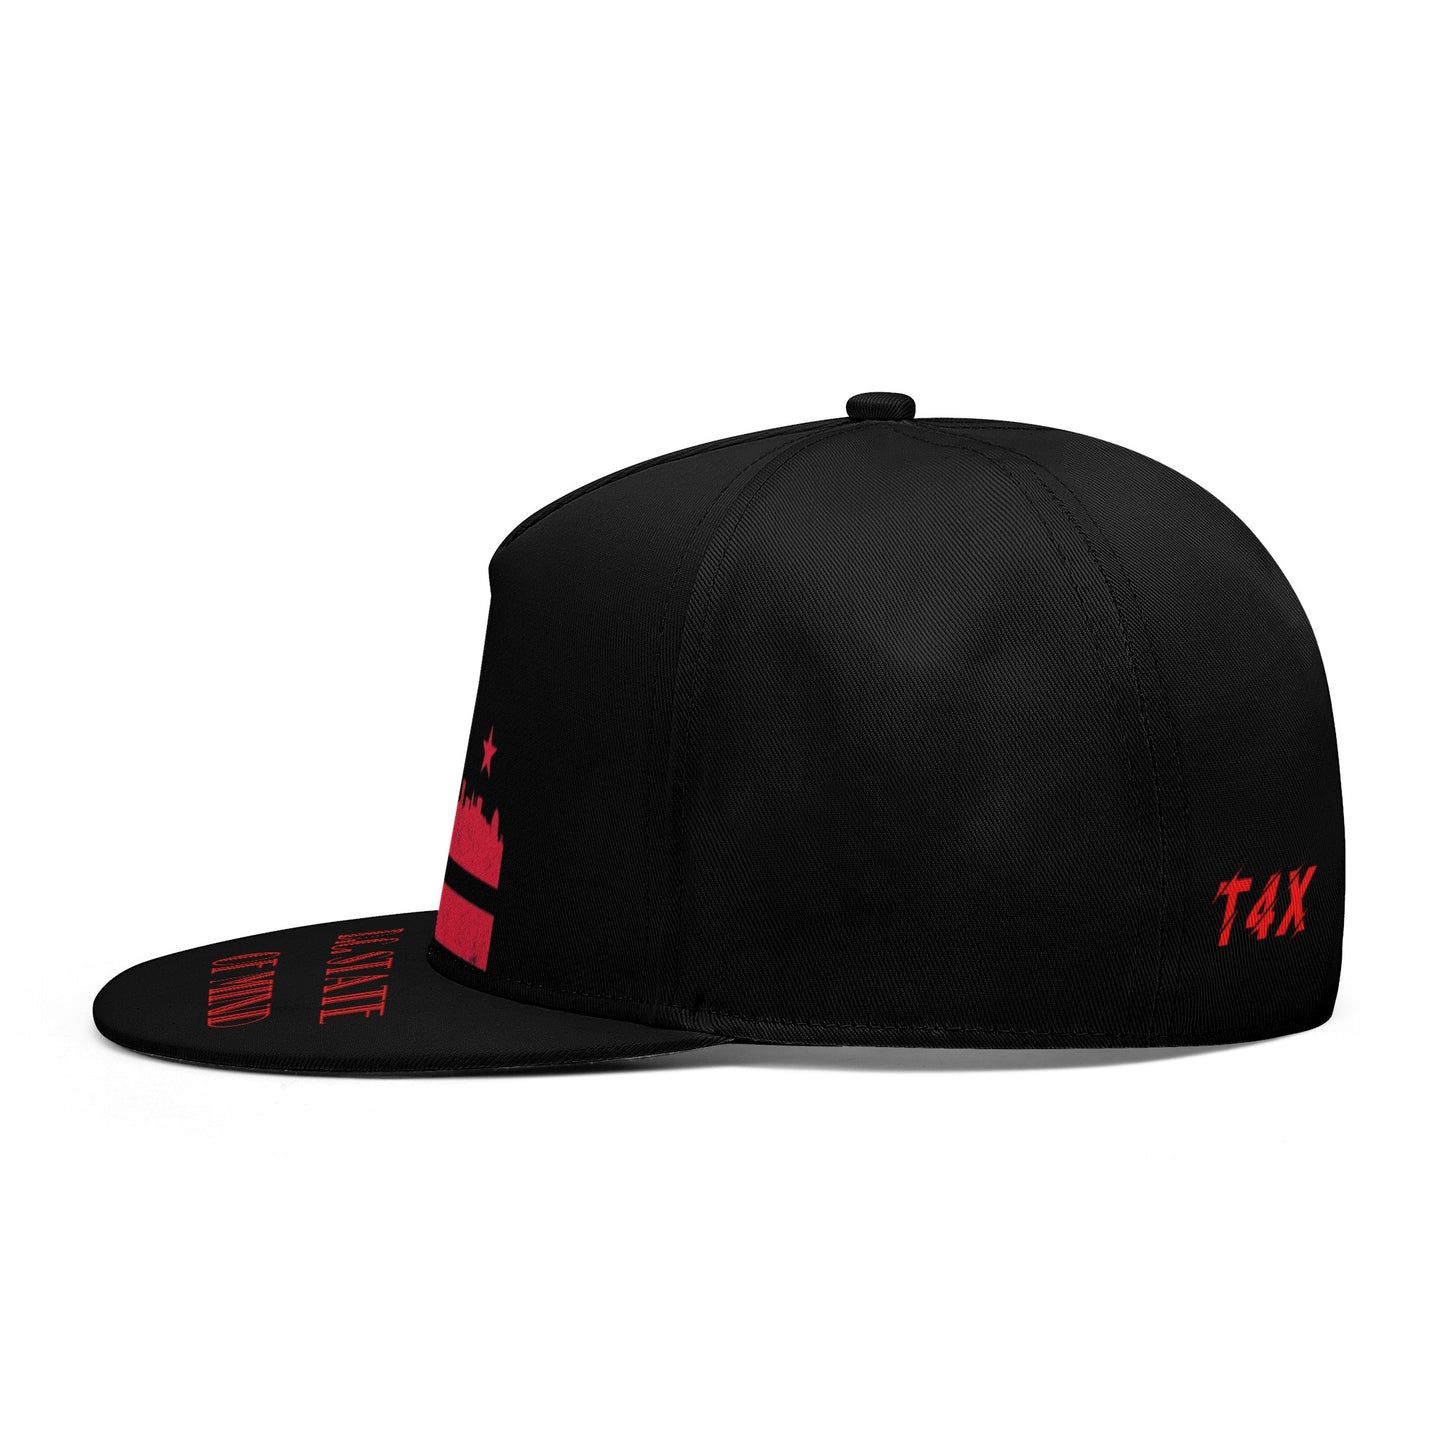 T4x Its A D.C. State of Mind Hip-Hop Hat